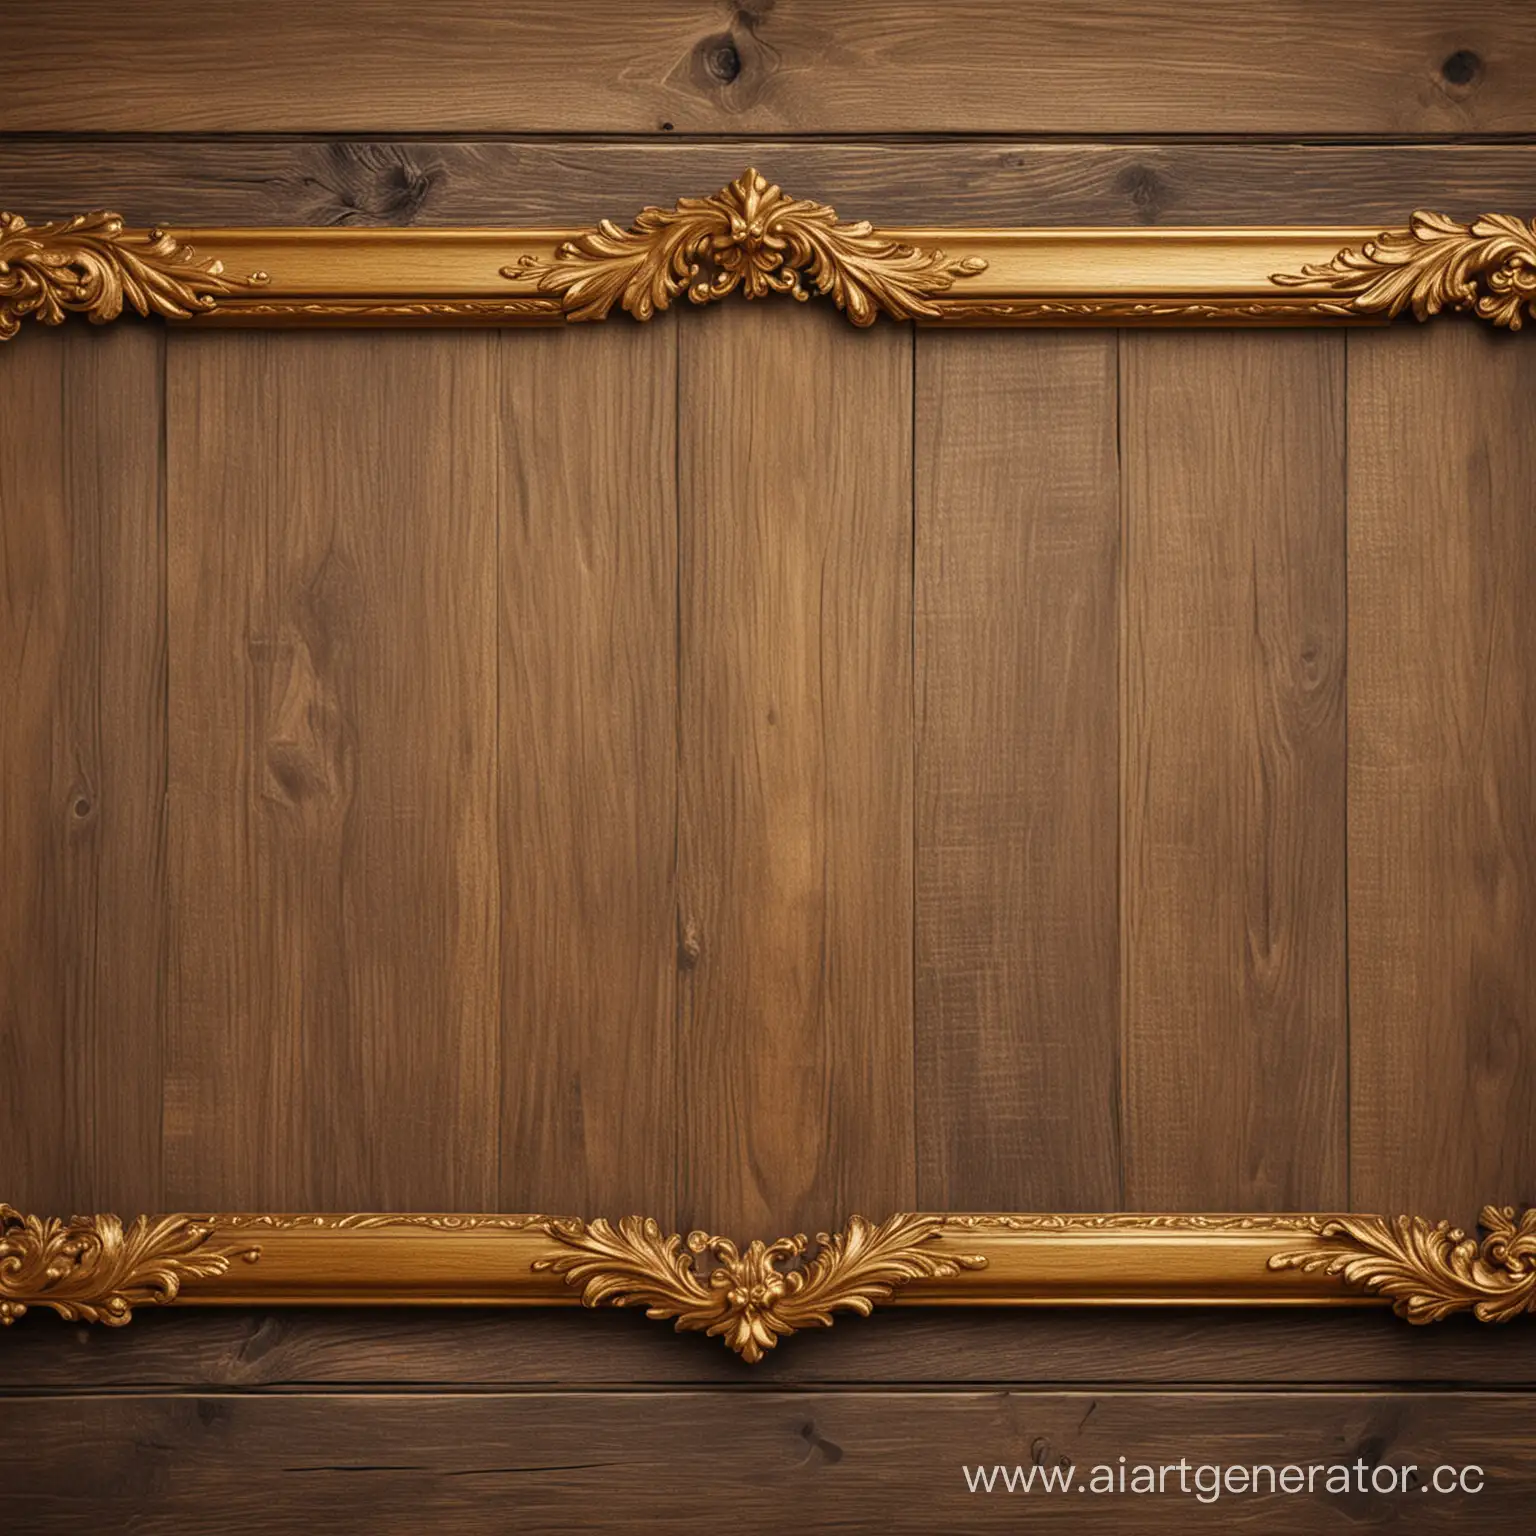 Rustic-Wooden-Background-with-Elegant-Golden-Trim